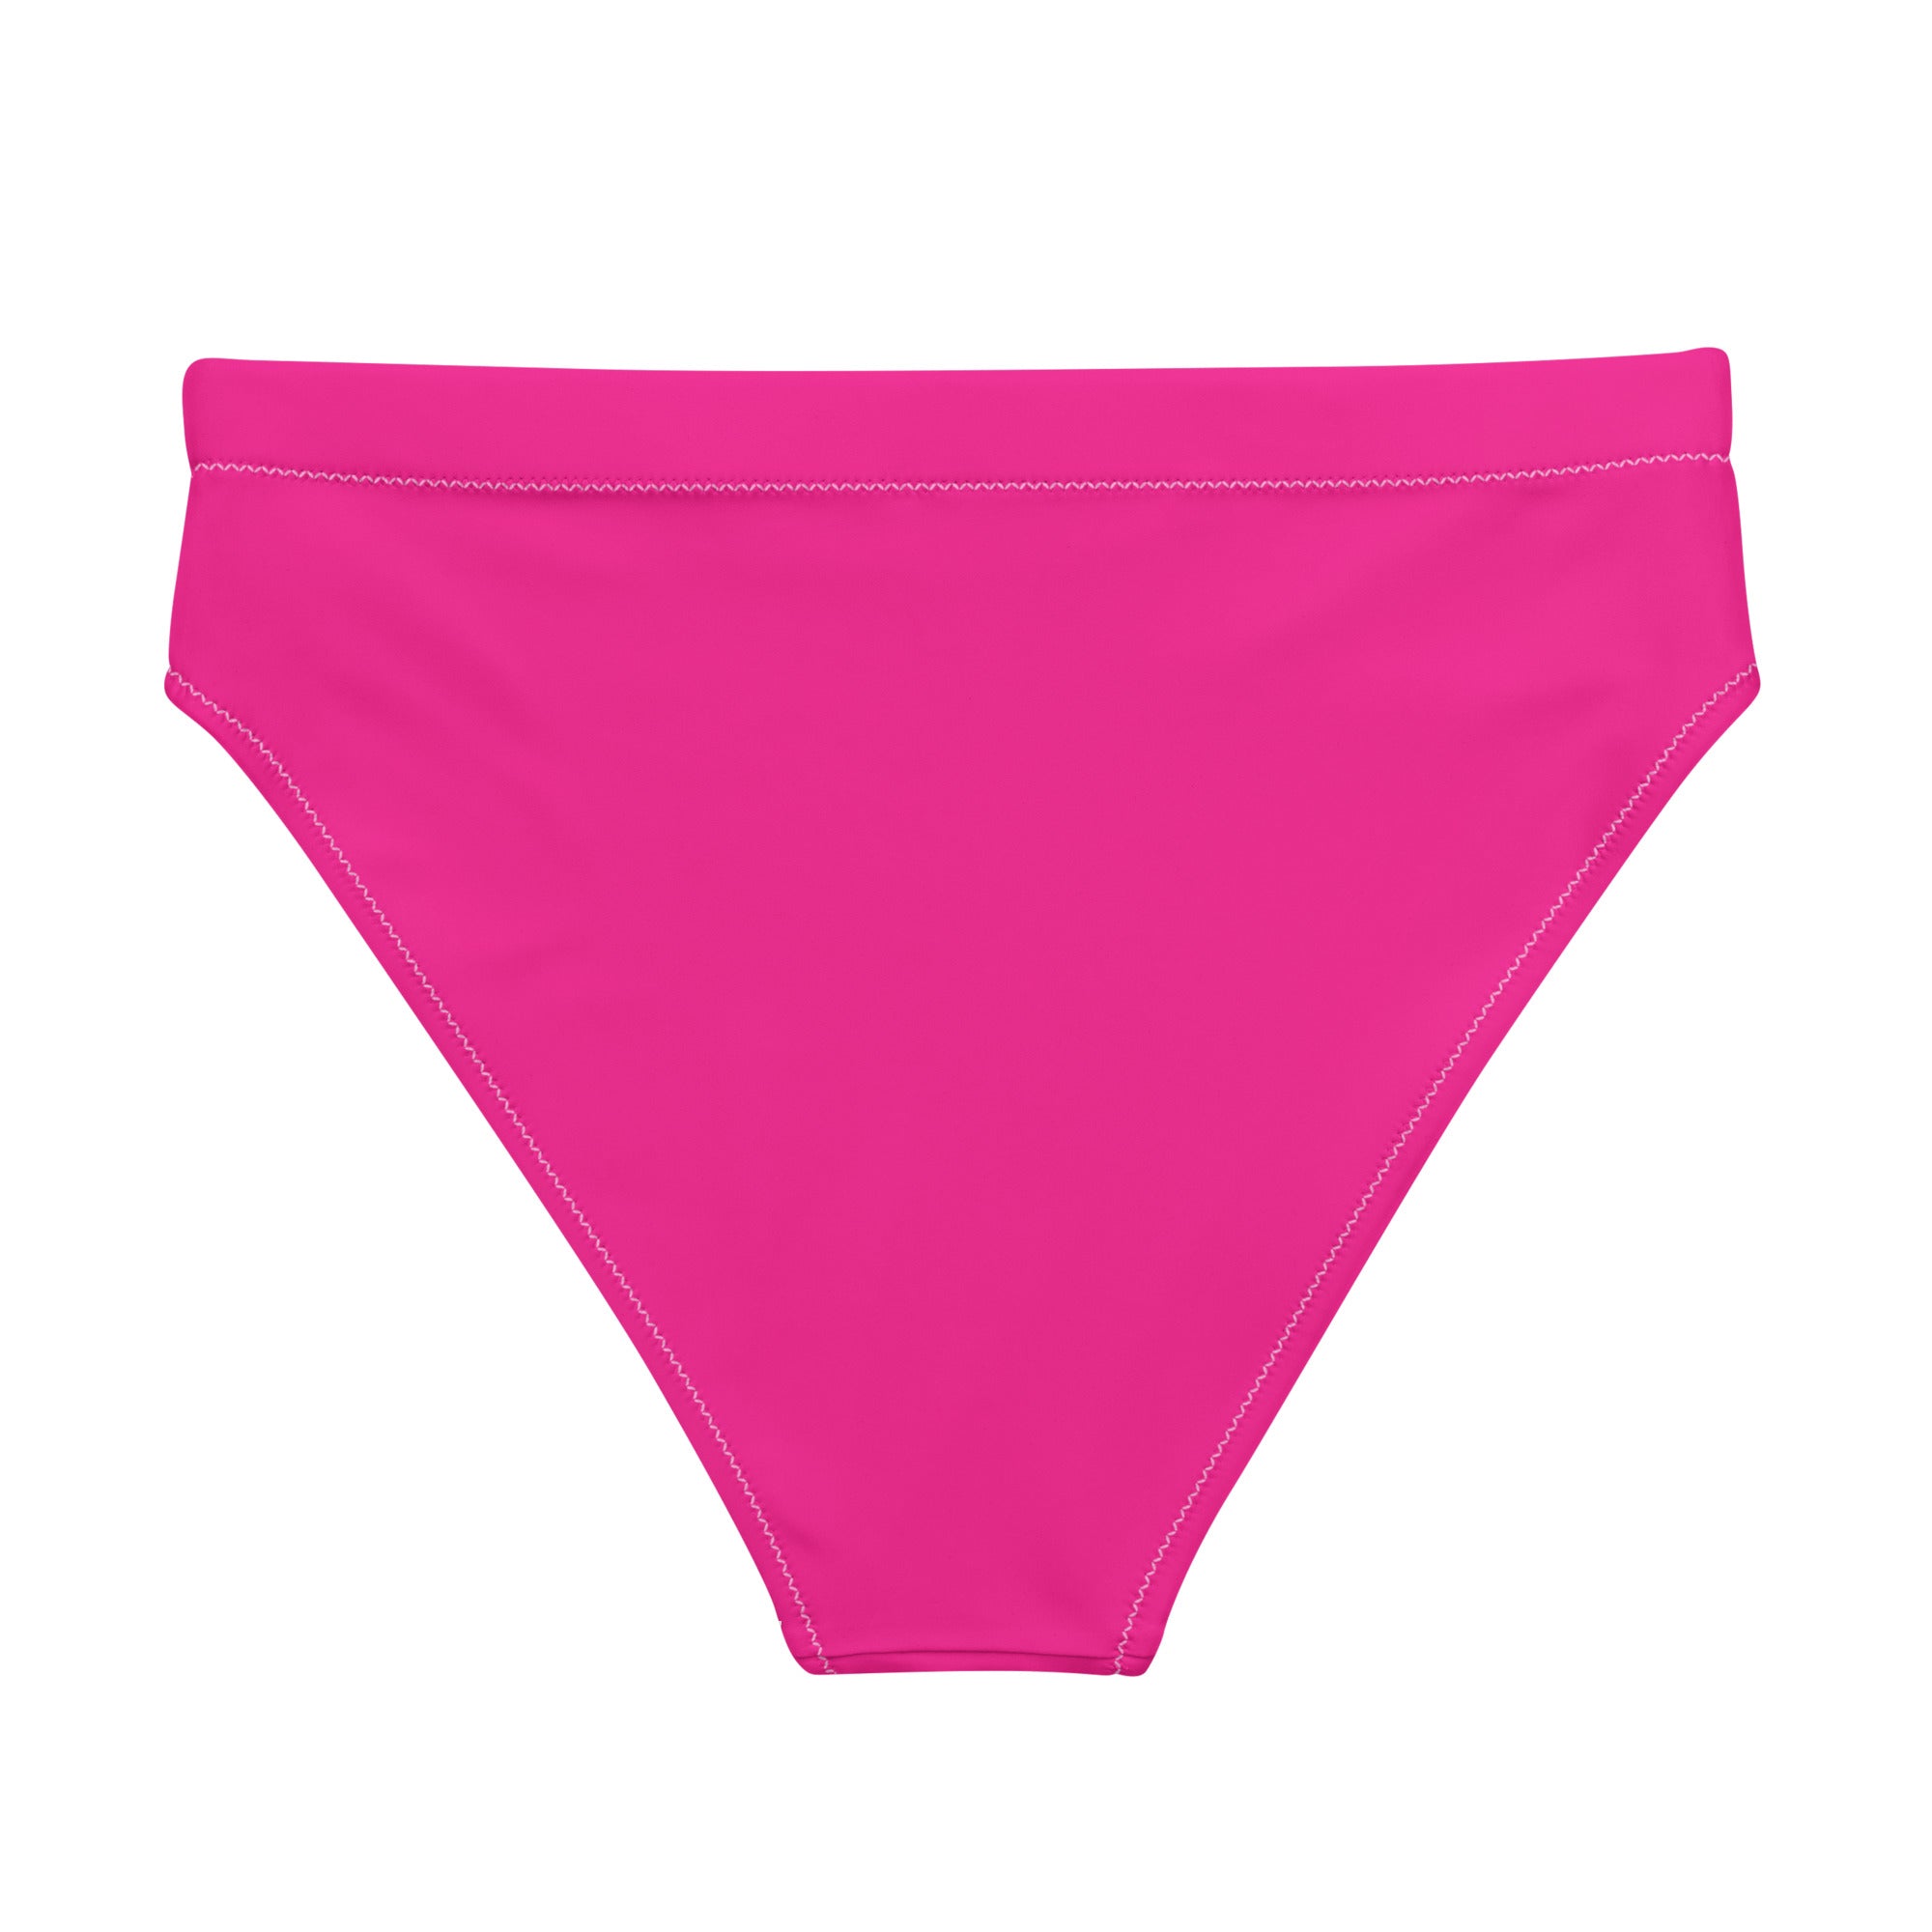 Pink solid bikini bottoms women’s swimwear